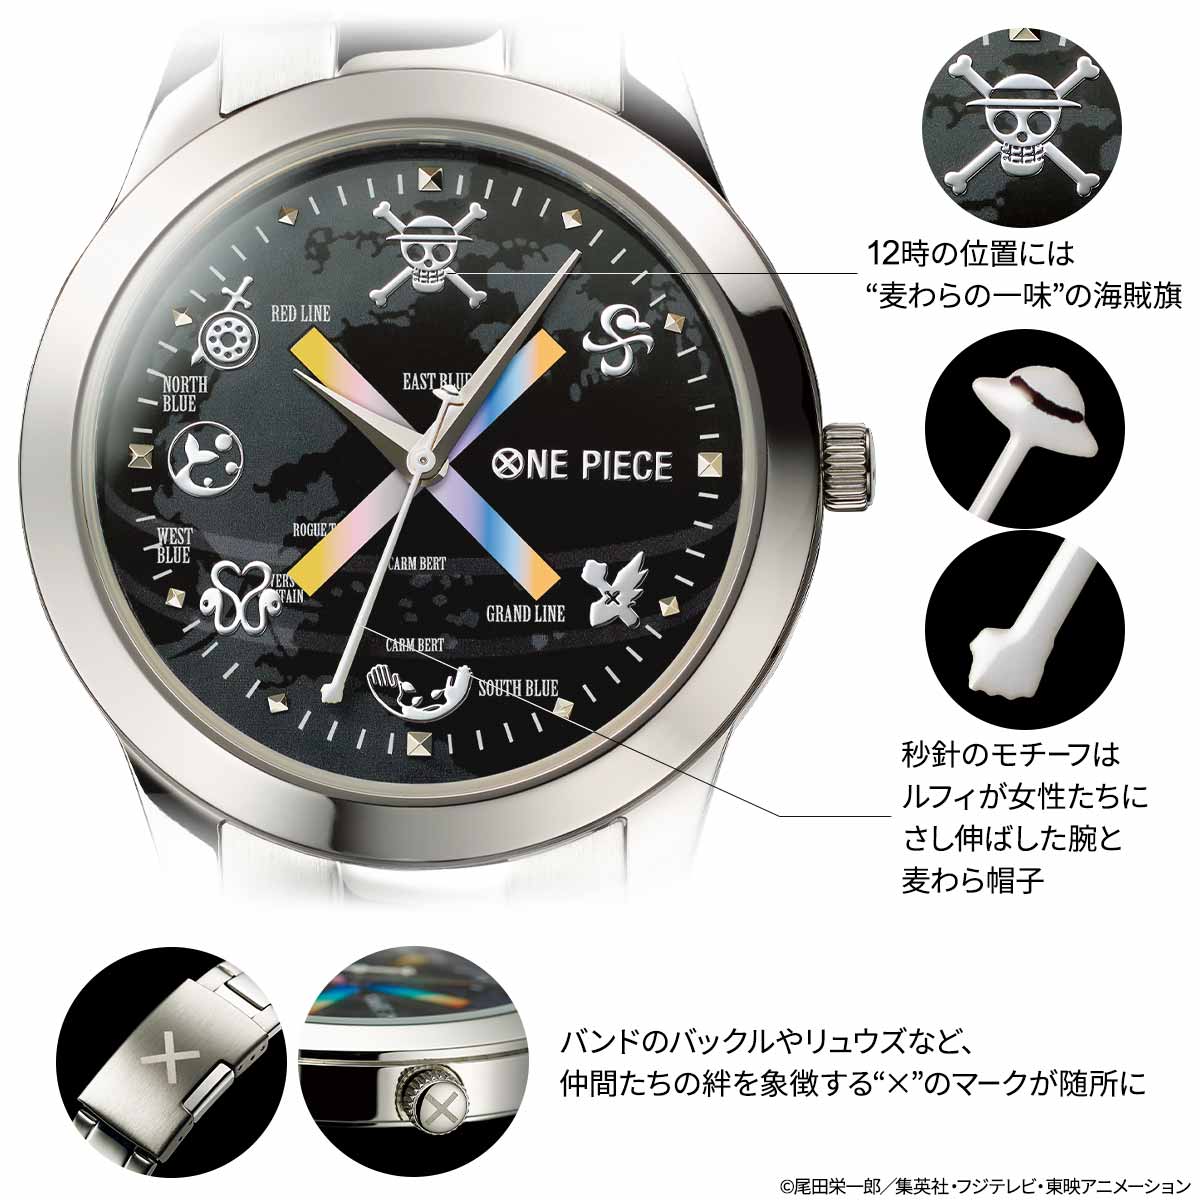 PREMICO「ワンピース 出会いの航路 オフィシャルライセンス腕時計」５